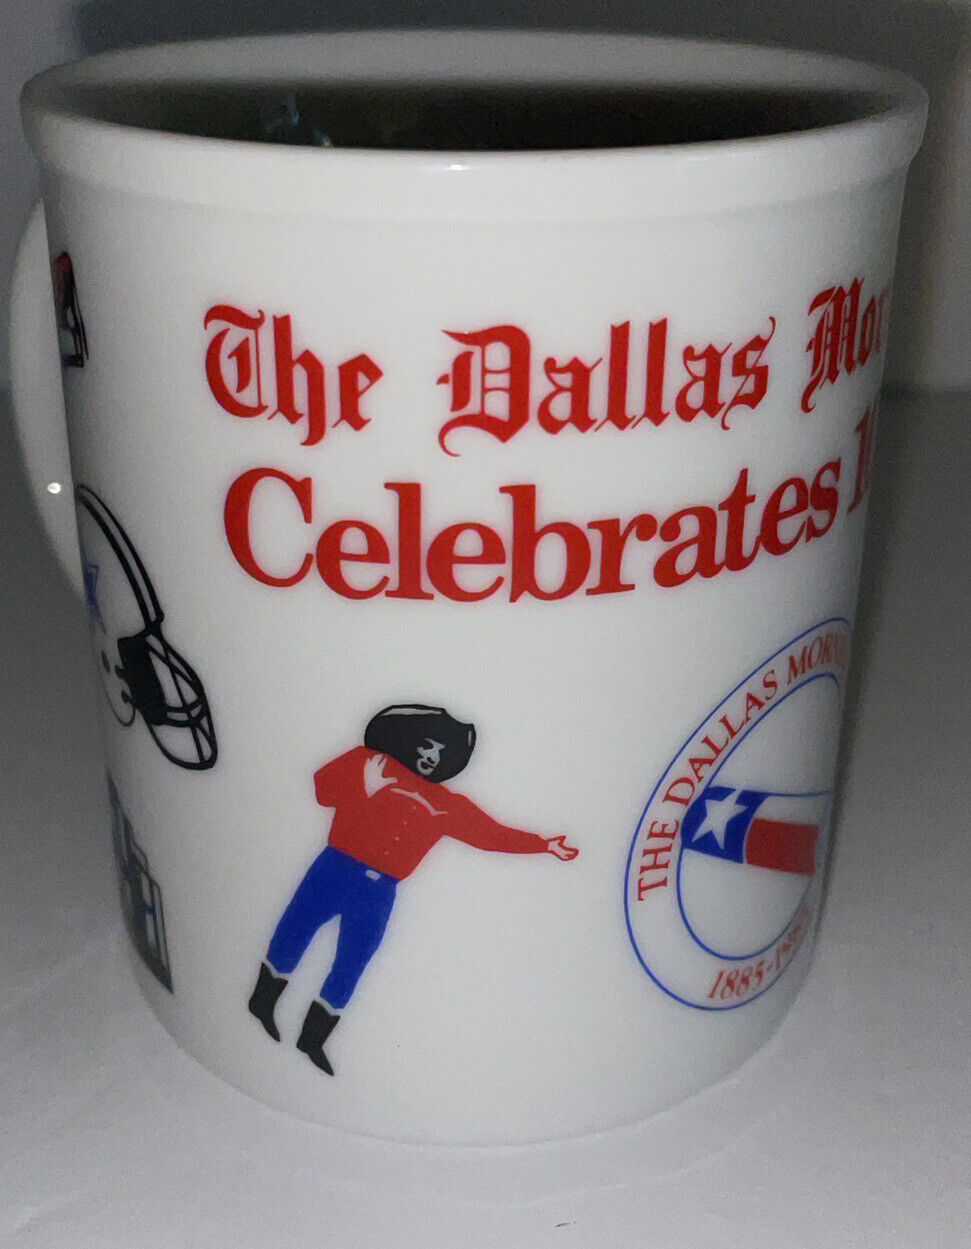 The Dallas Morning News Celebrates 100 Years 1885-1985 Ceramic Cup/Mug